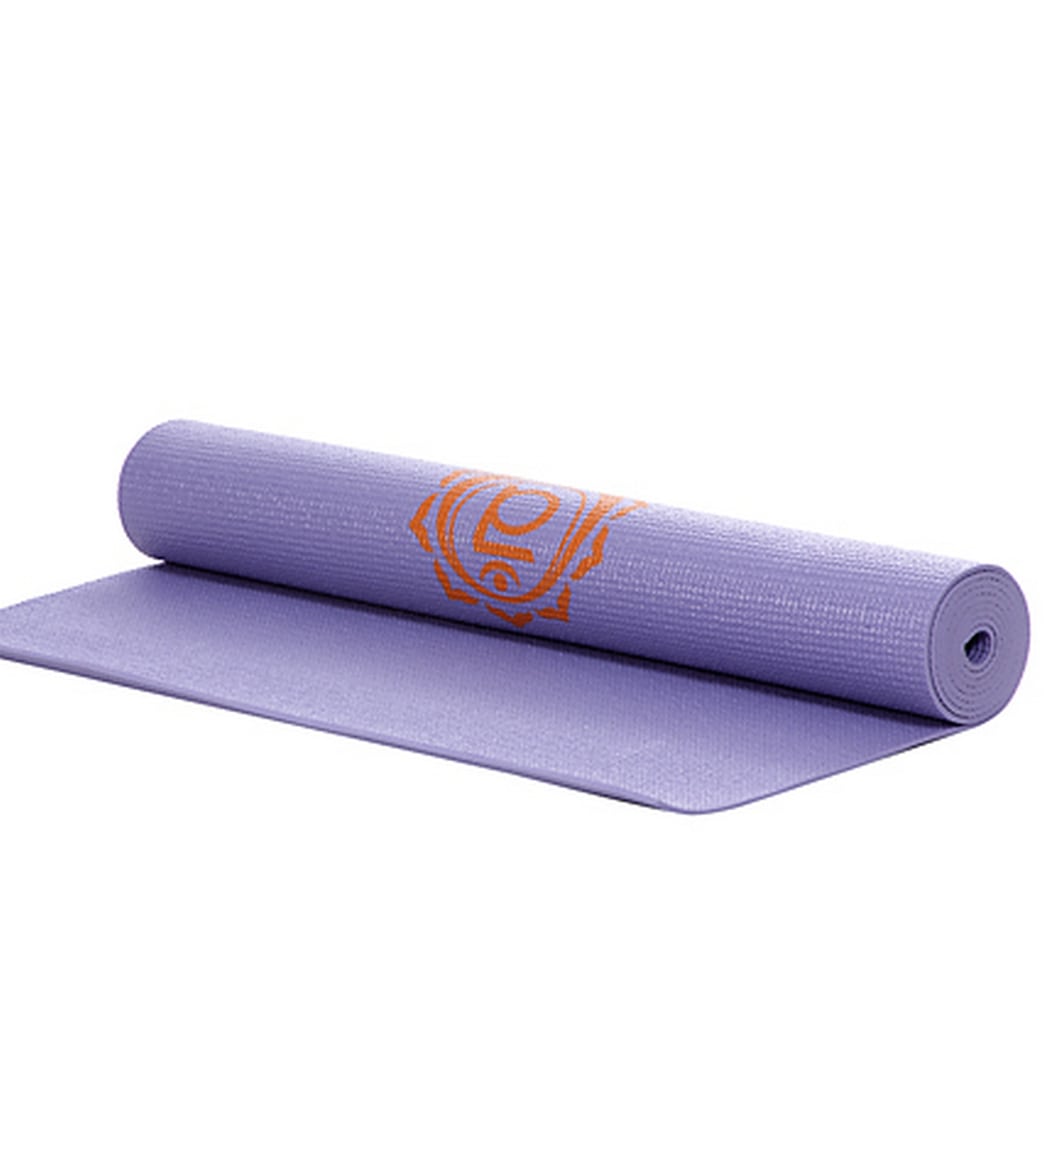 Gaiam Chakra Yoga Mat 68 3mm at